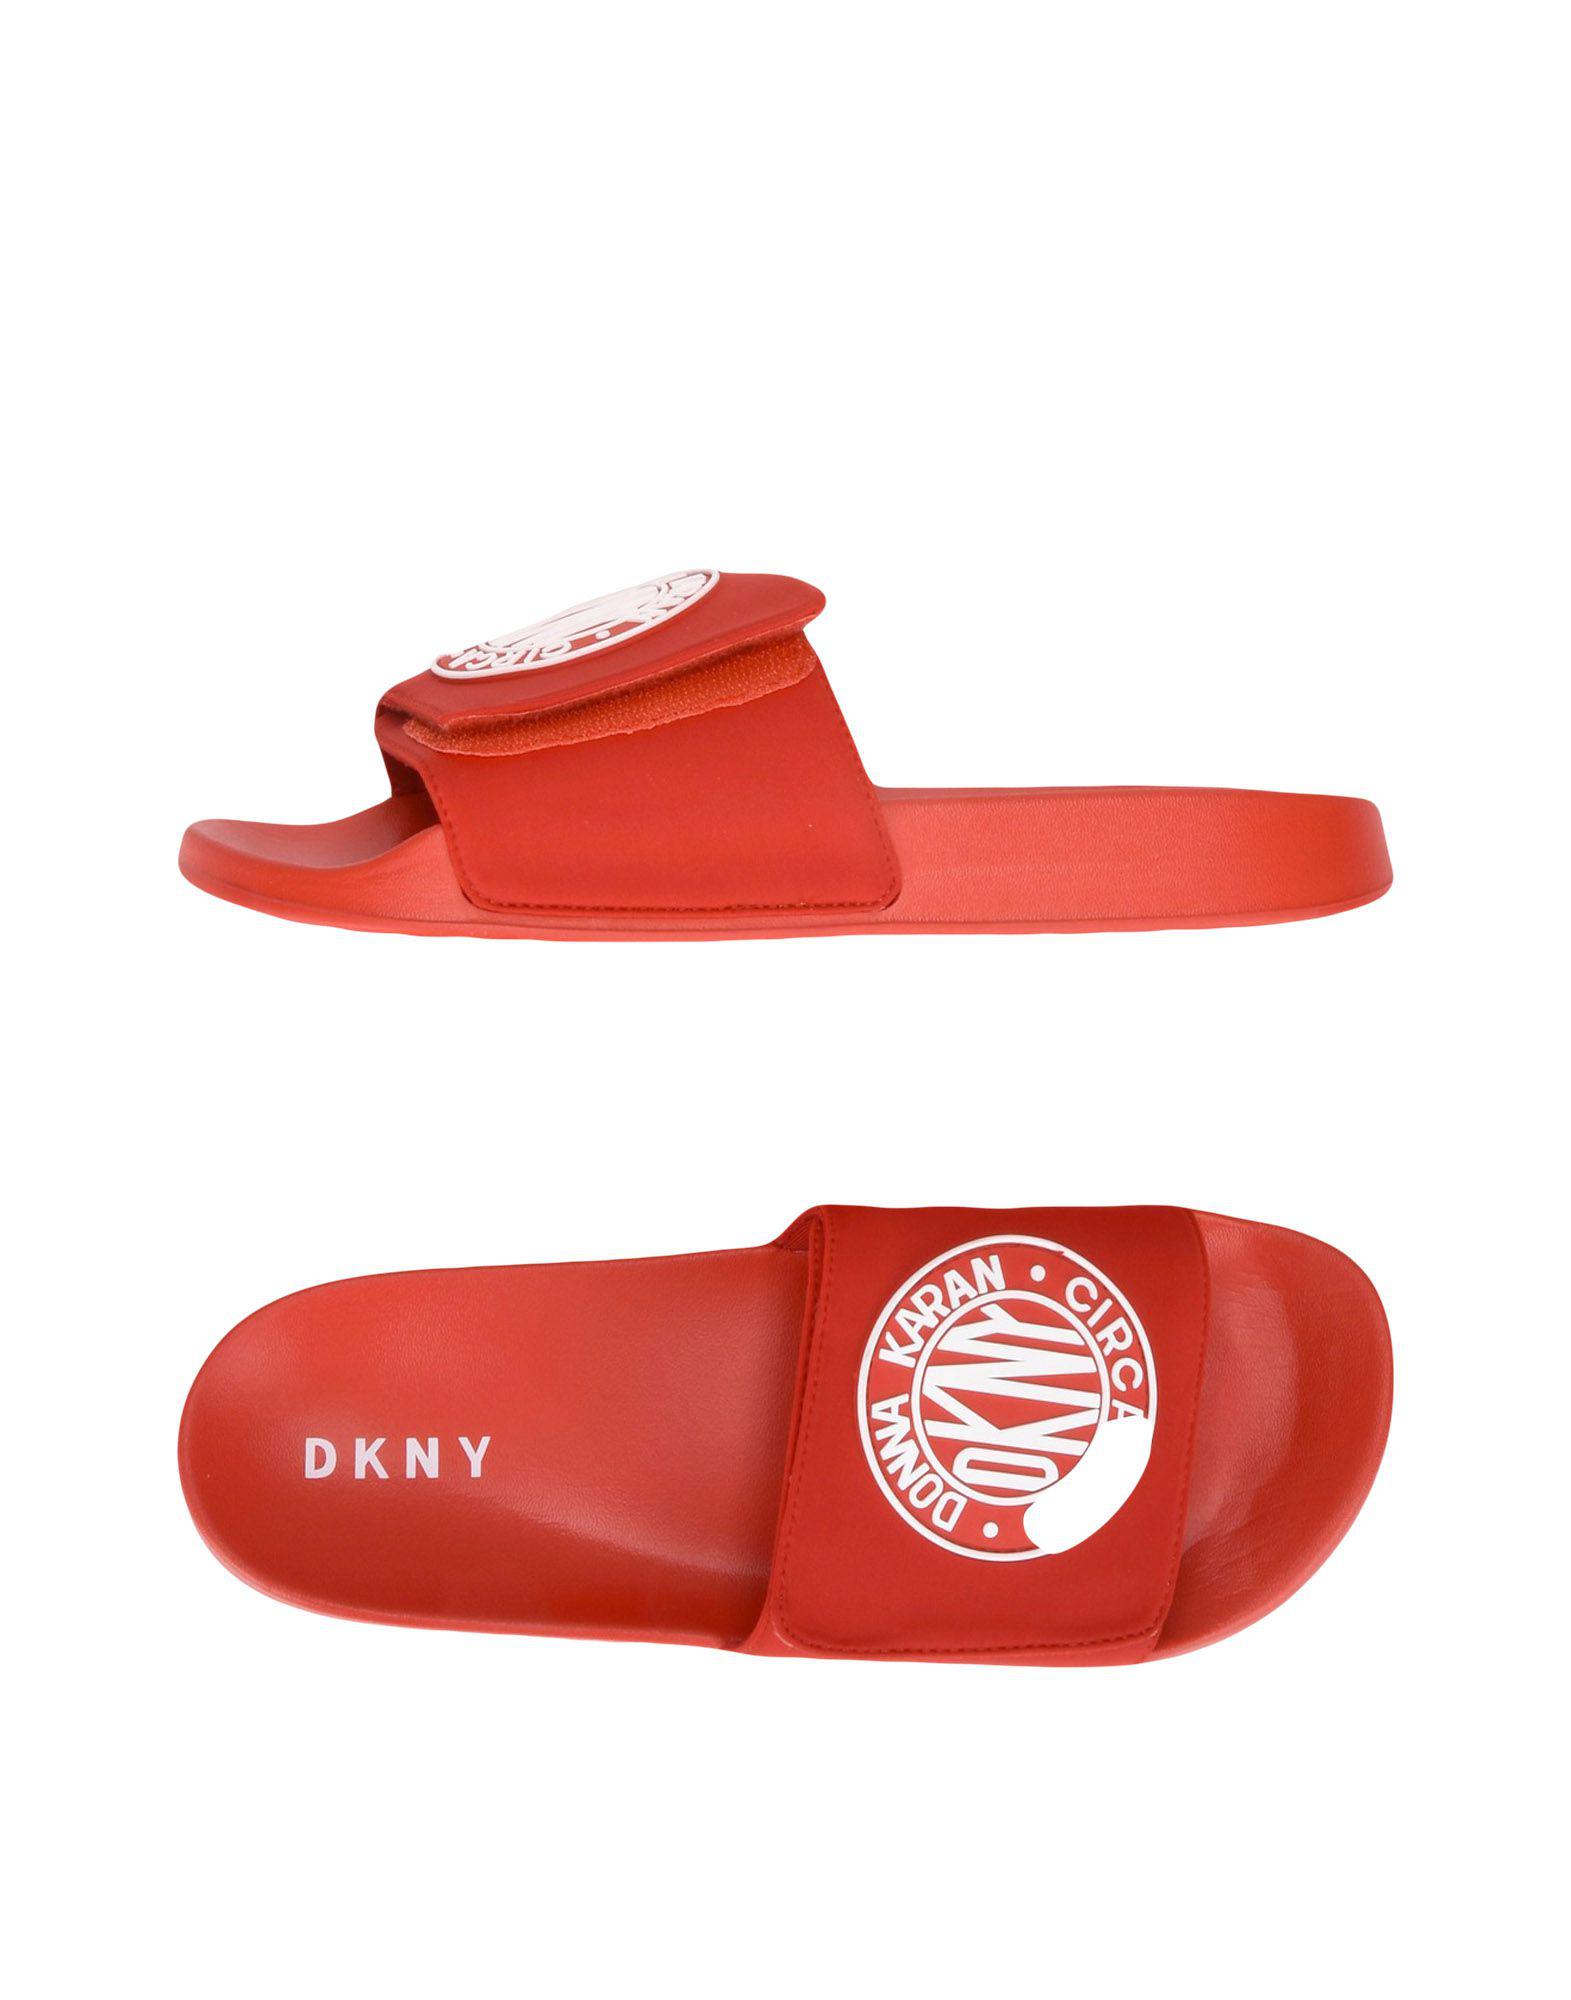 DKNY Neoprene Sandals in Red - Lyst